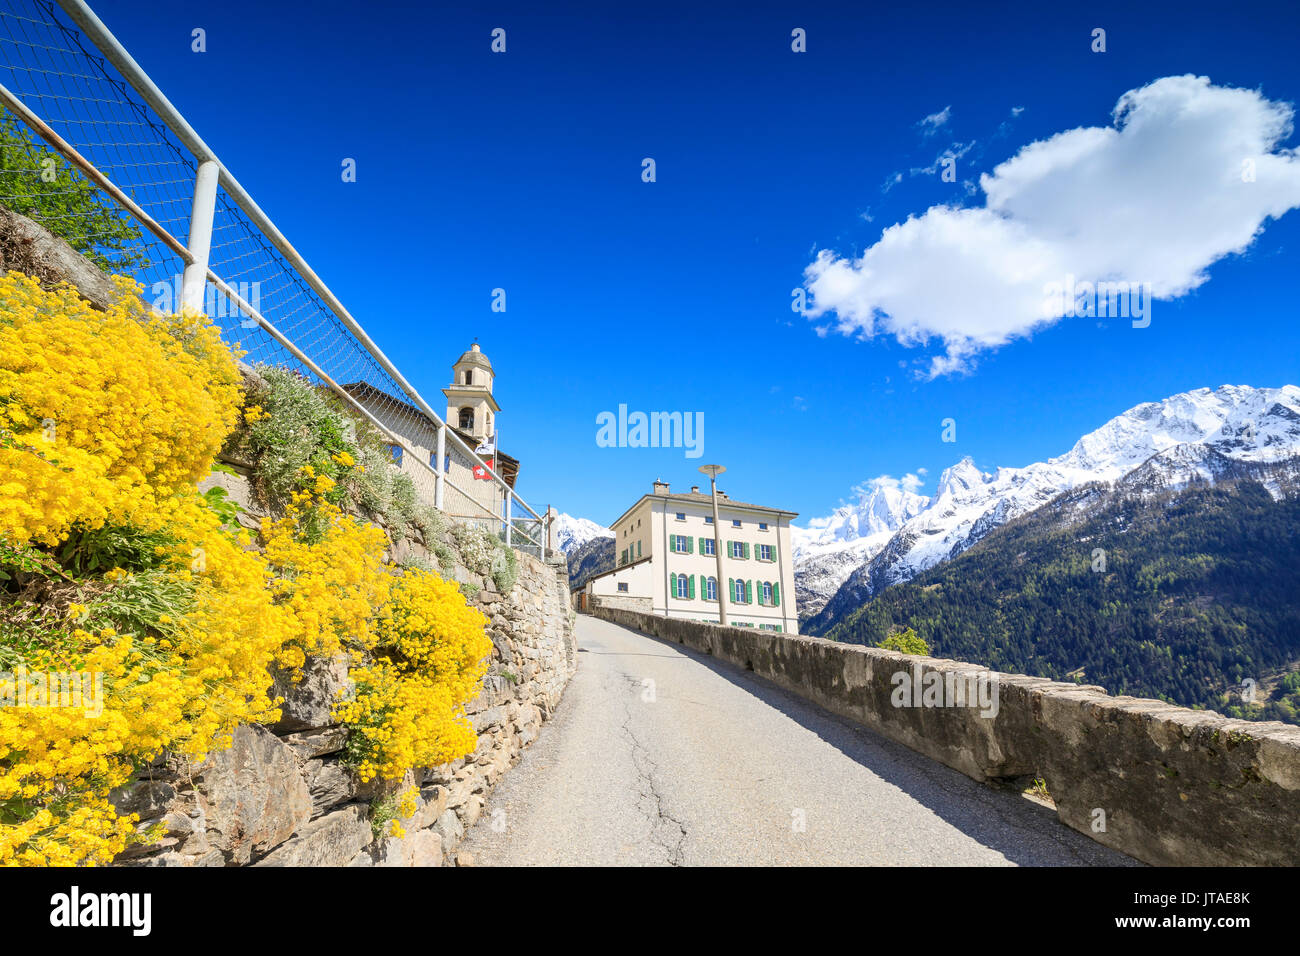 Yellow flowers and snowy peaks on the roadway to Soglio, Maloja, Bregaglia Valley, Engadine, canton of Graubunden, Switzerland Stock Photo